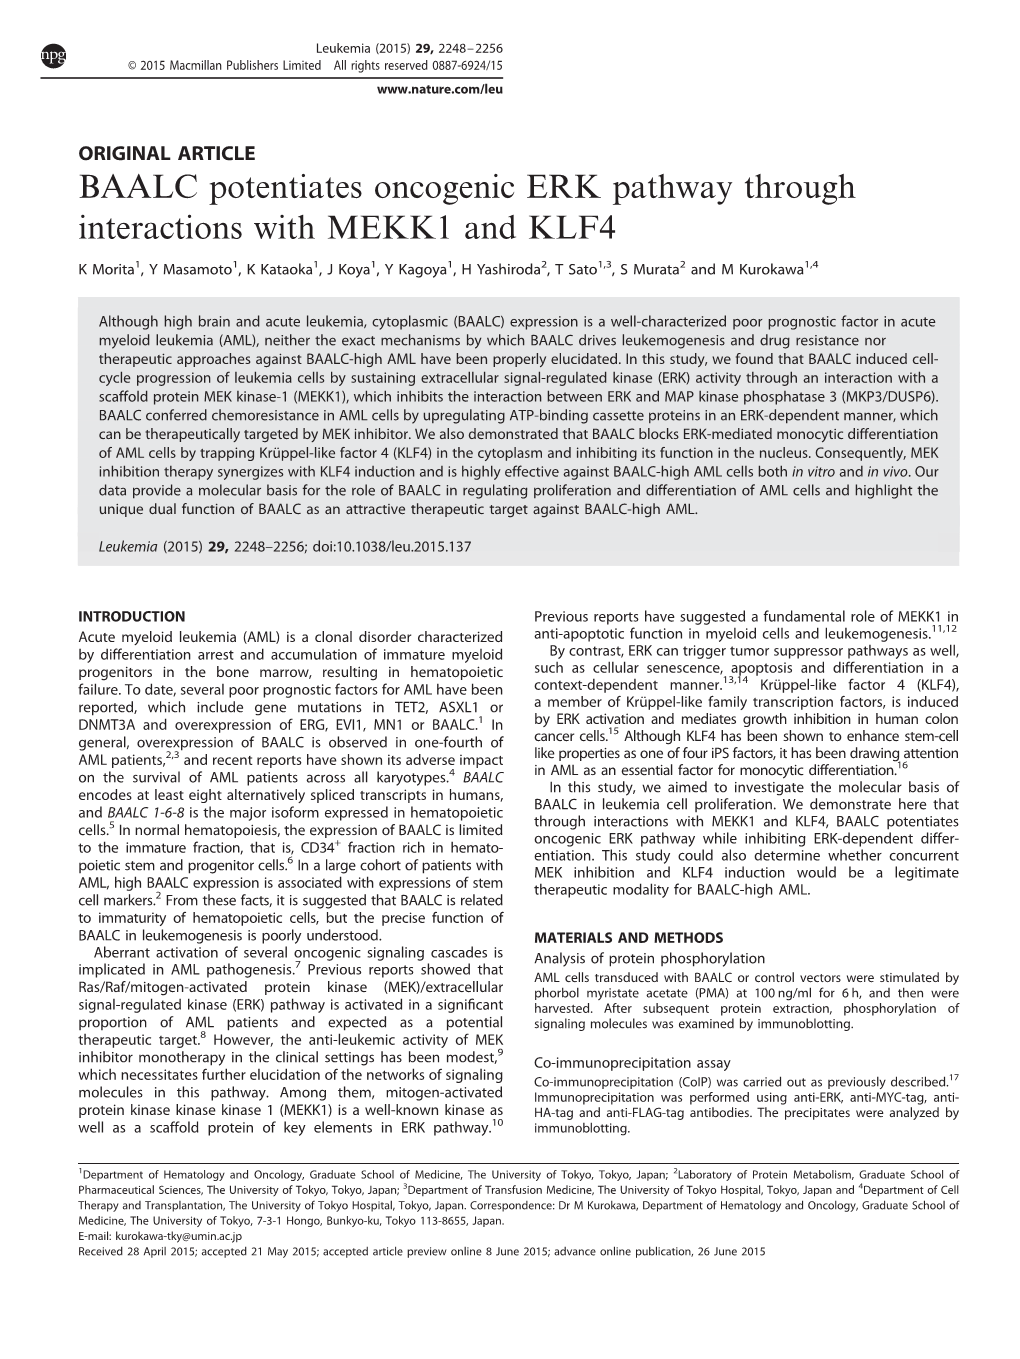 BAALC Potentiates Oncogenic ERK Pathway Through Interactions with MEKK1 and KLF4